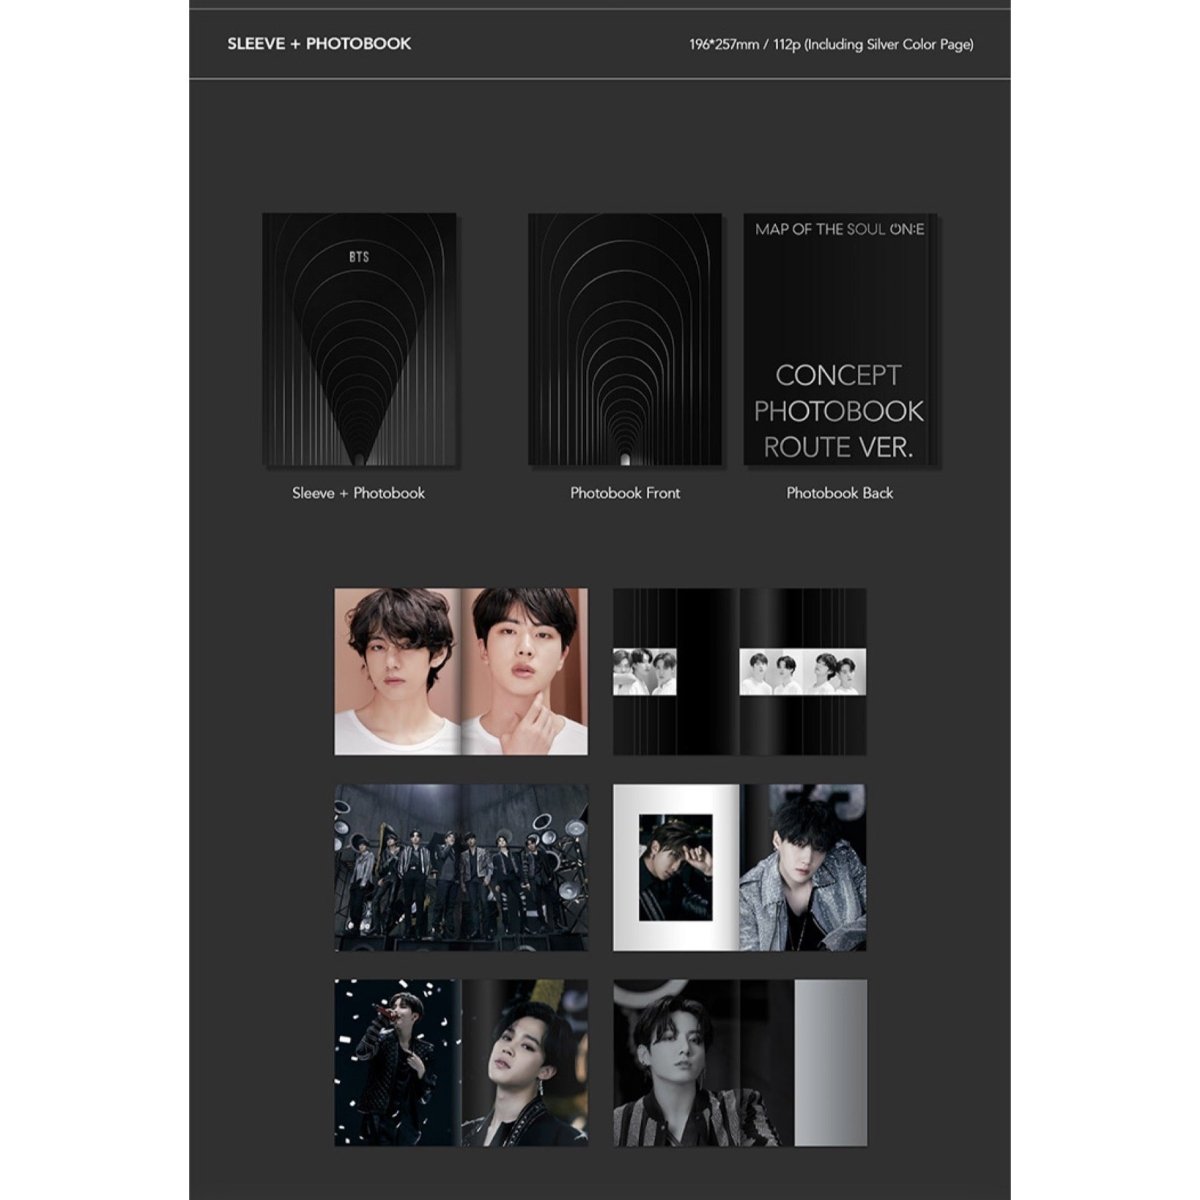 BTS - MAP OF THE SOUL ON:E CONCEPT PHOTOBOOK – K-STAR